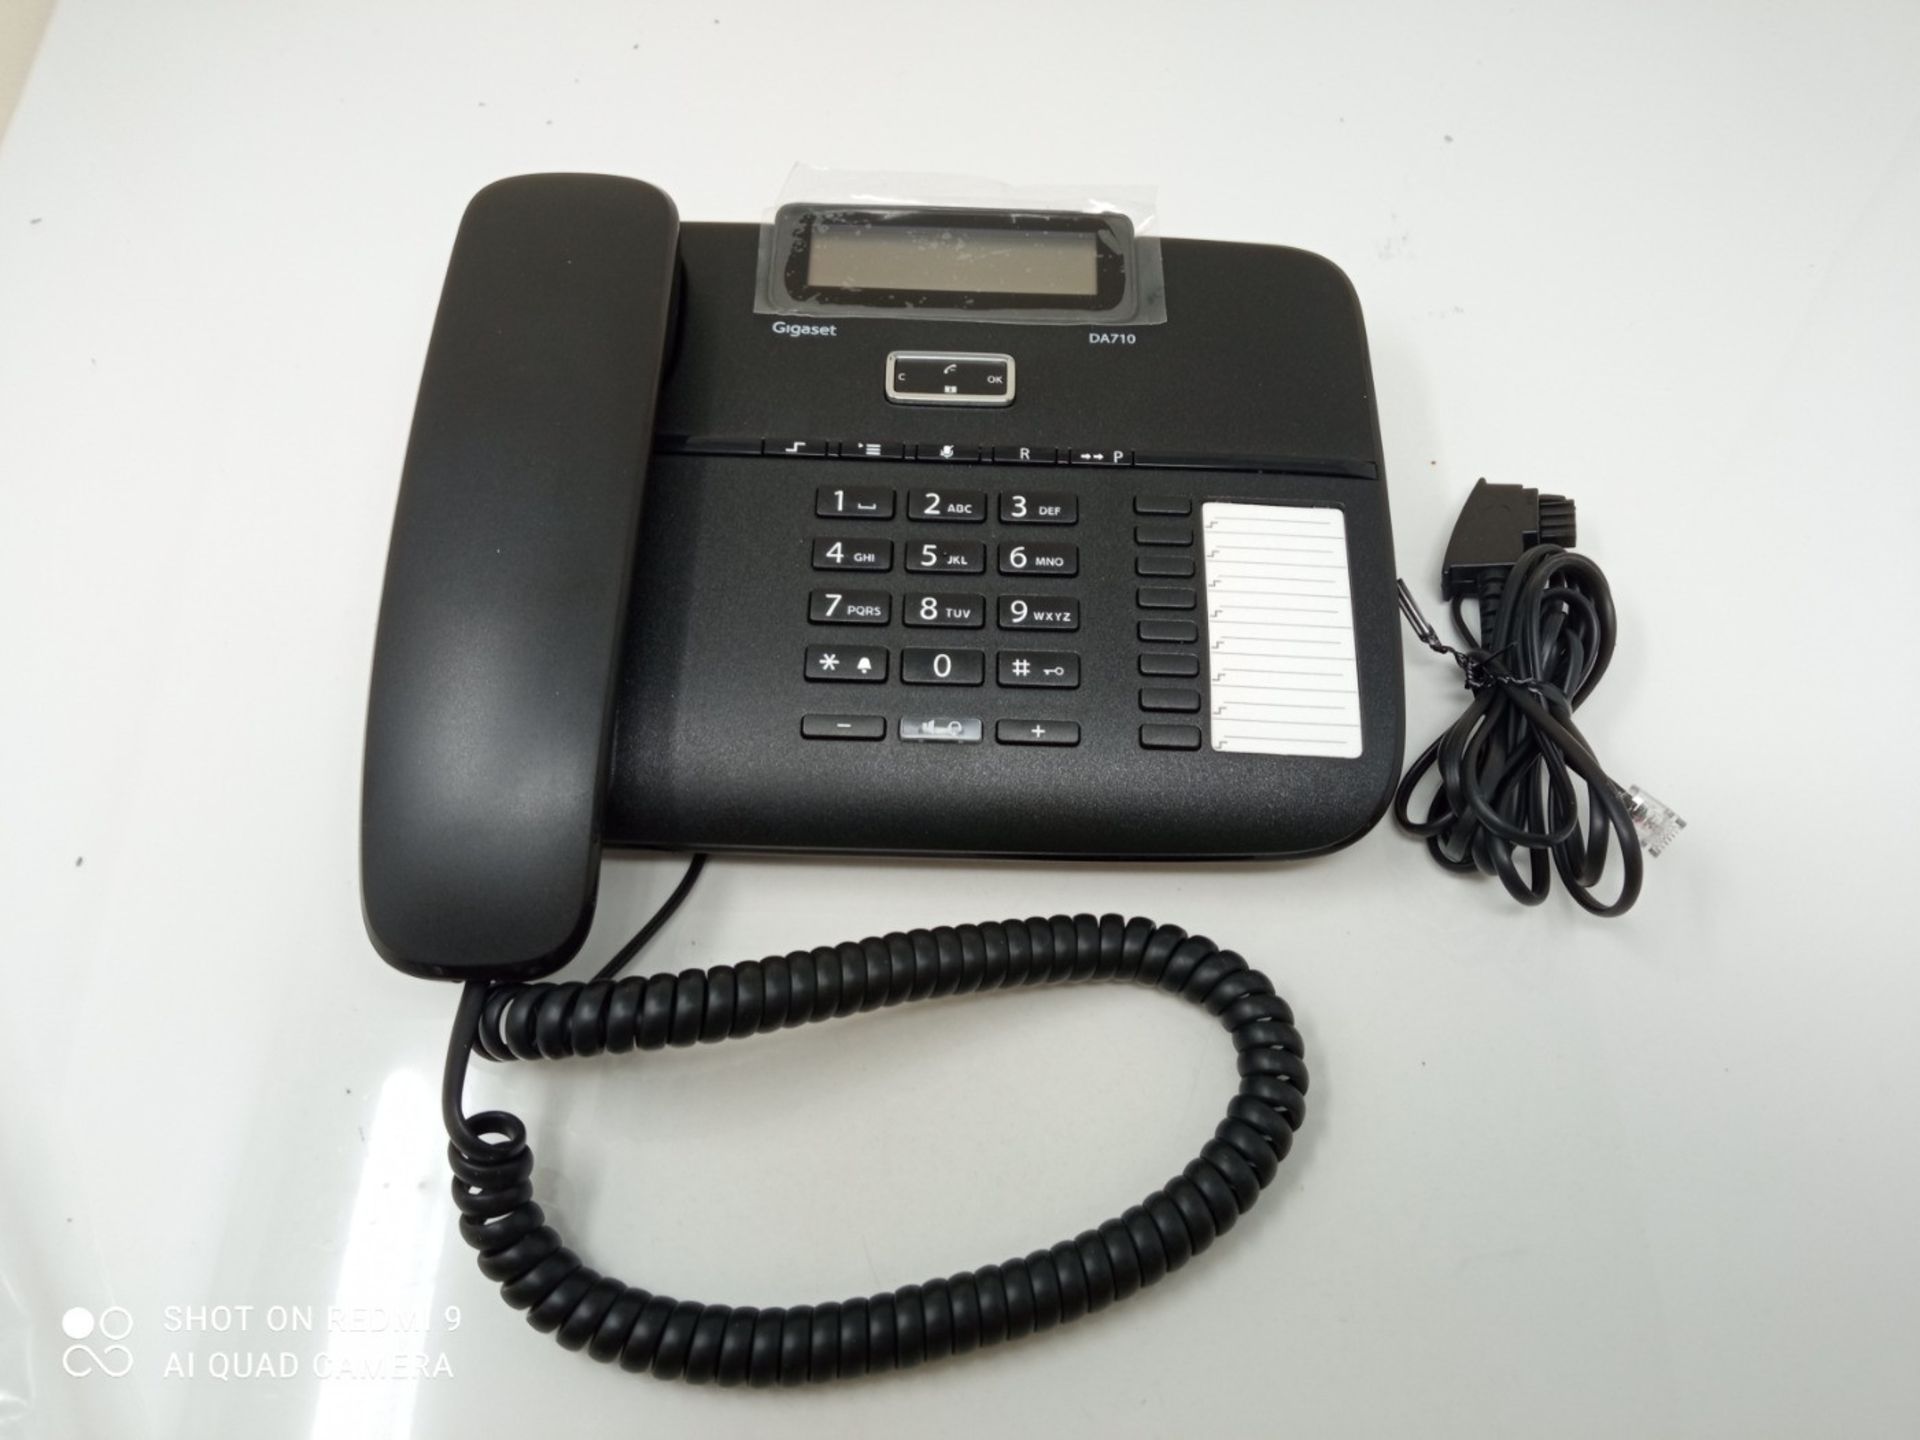 RRP £50.00 Gigaset DA710 Corded Telephone - Black - Image 3 of 3